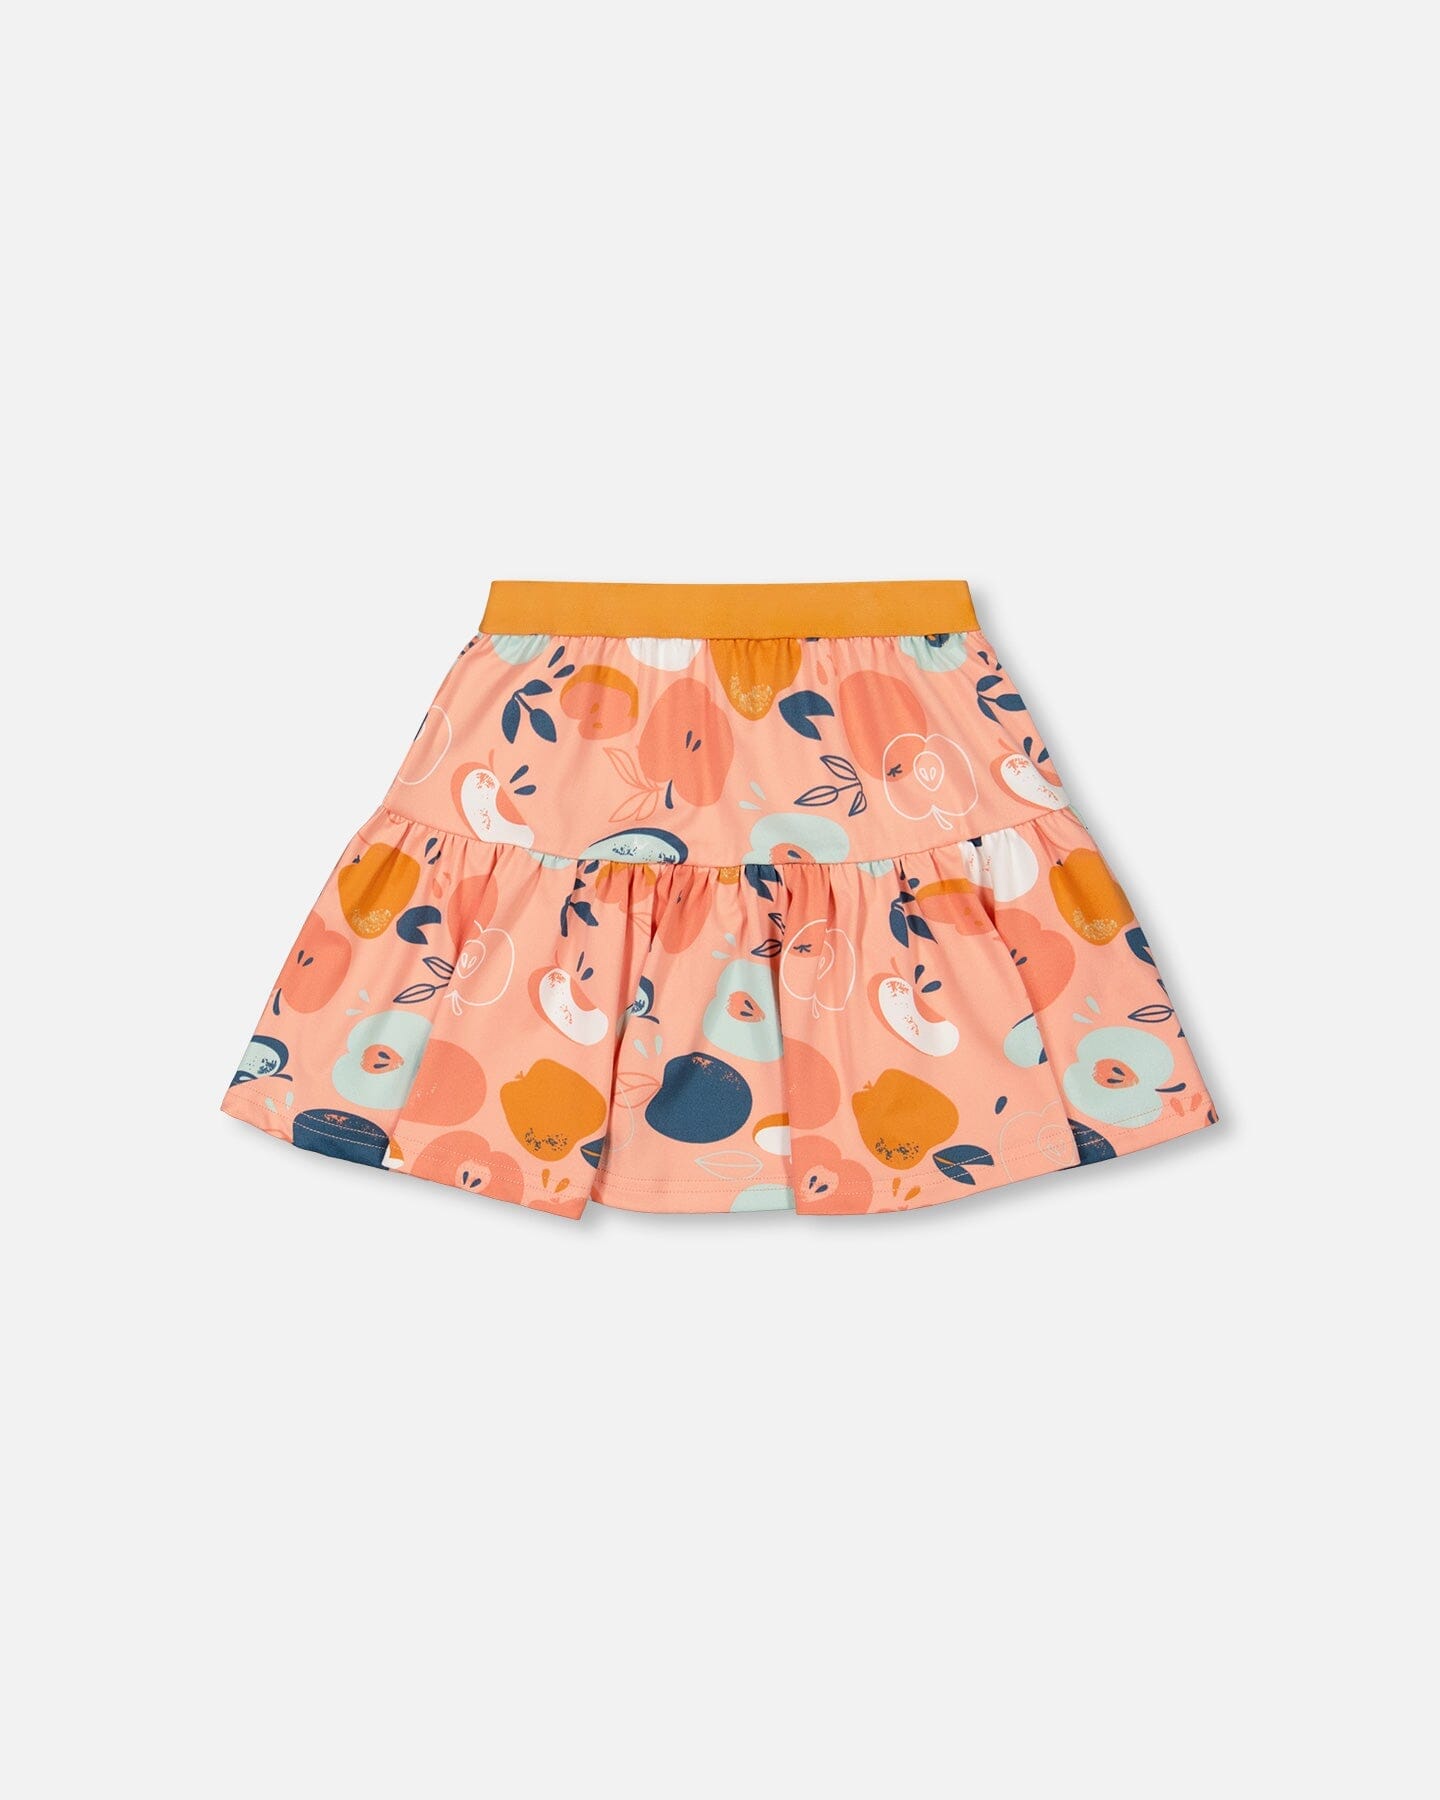 Brushed Jersey Skirt Salmon Pink Apple Print - F20K80_043